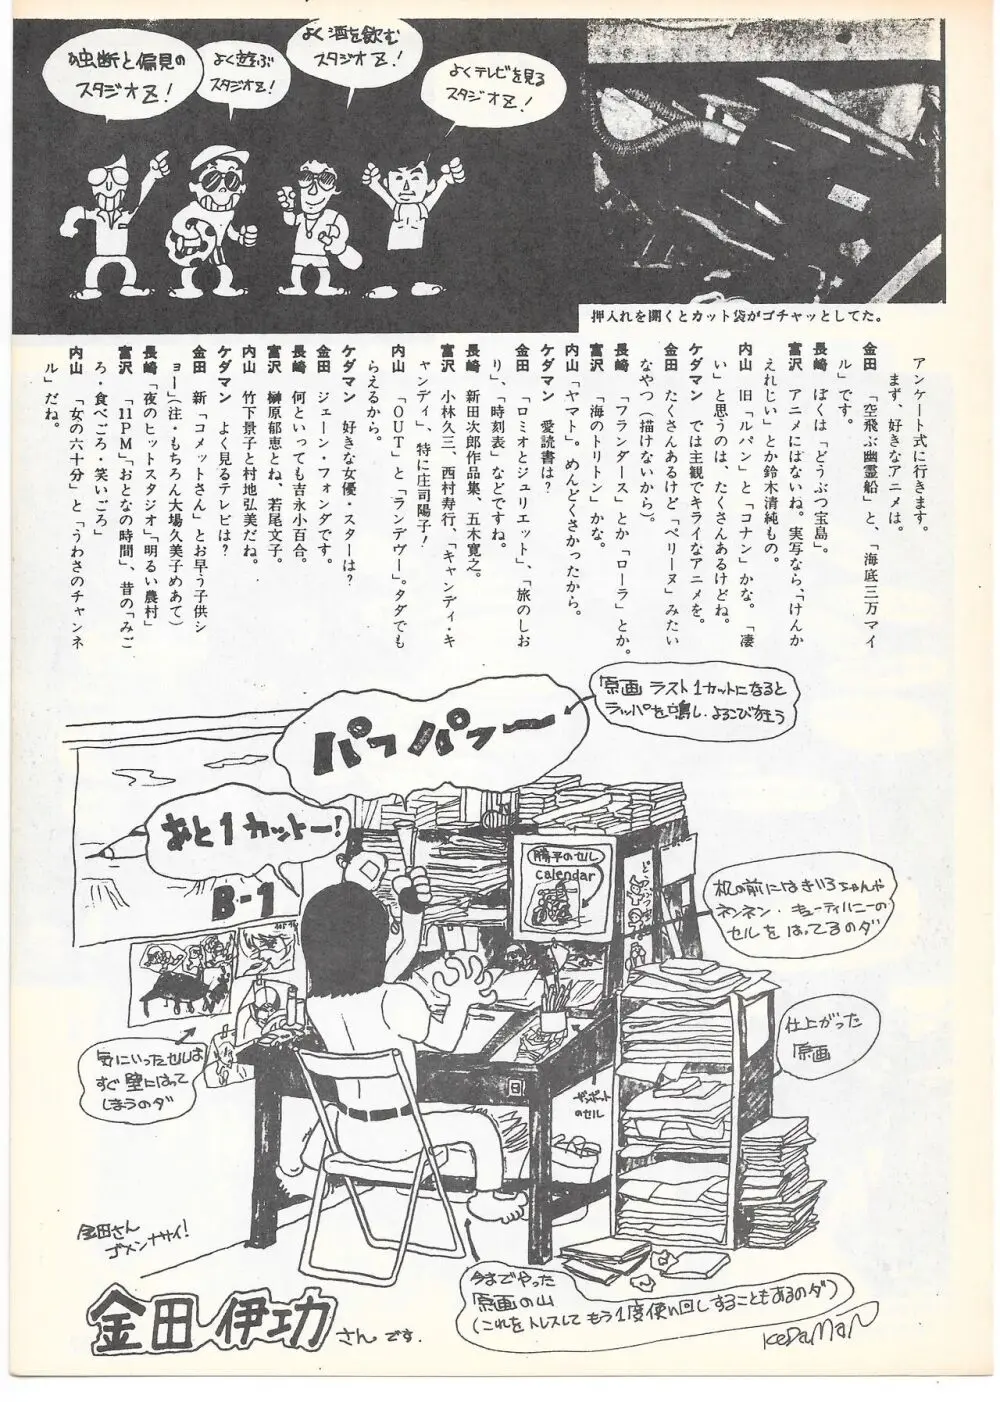 THE ANIMATOR 1 金田伊功特集号 - page126